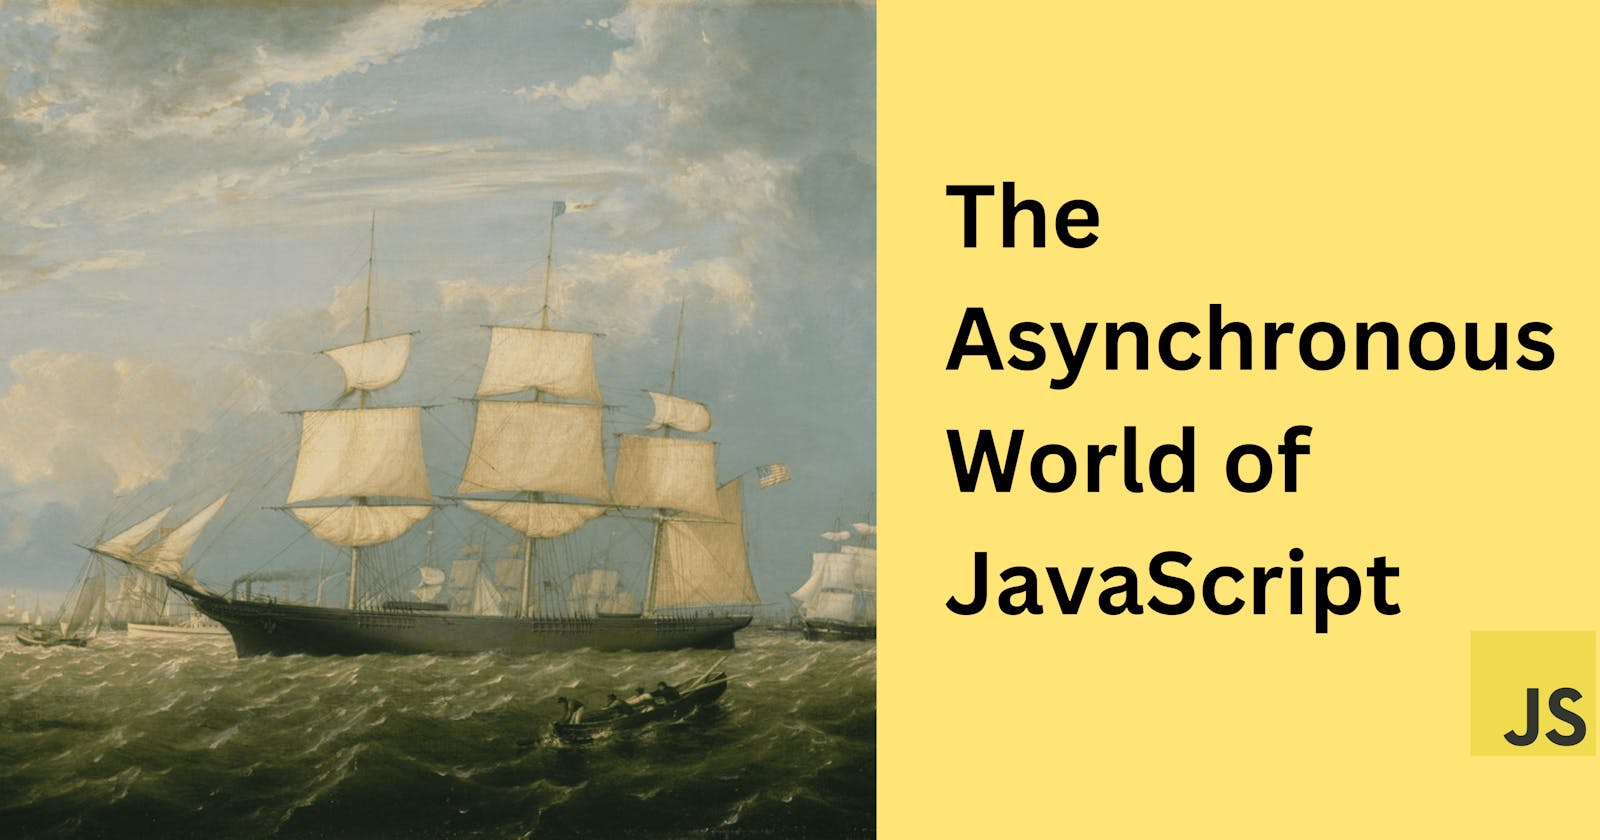 The Asynchronous World of JavaScript